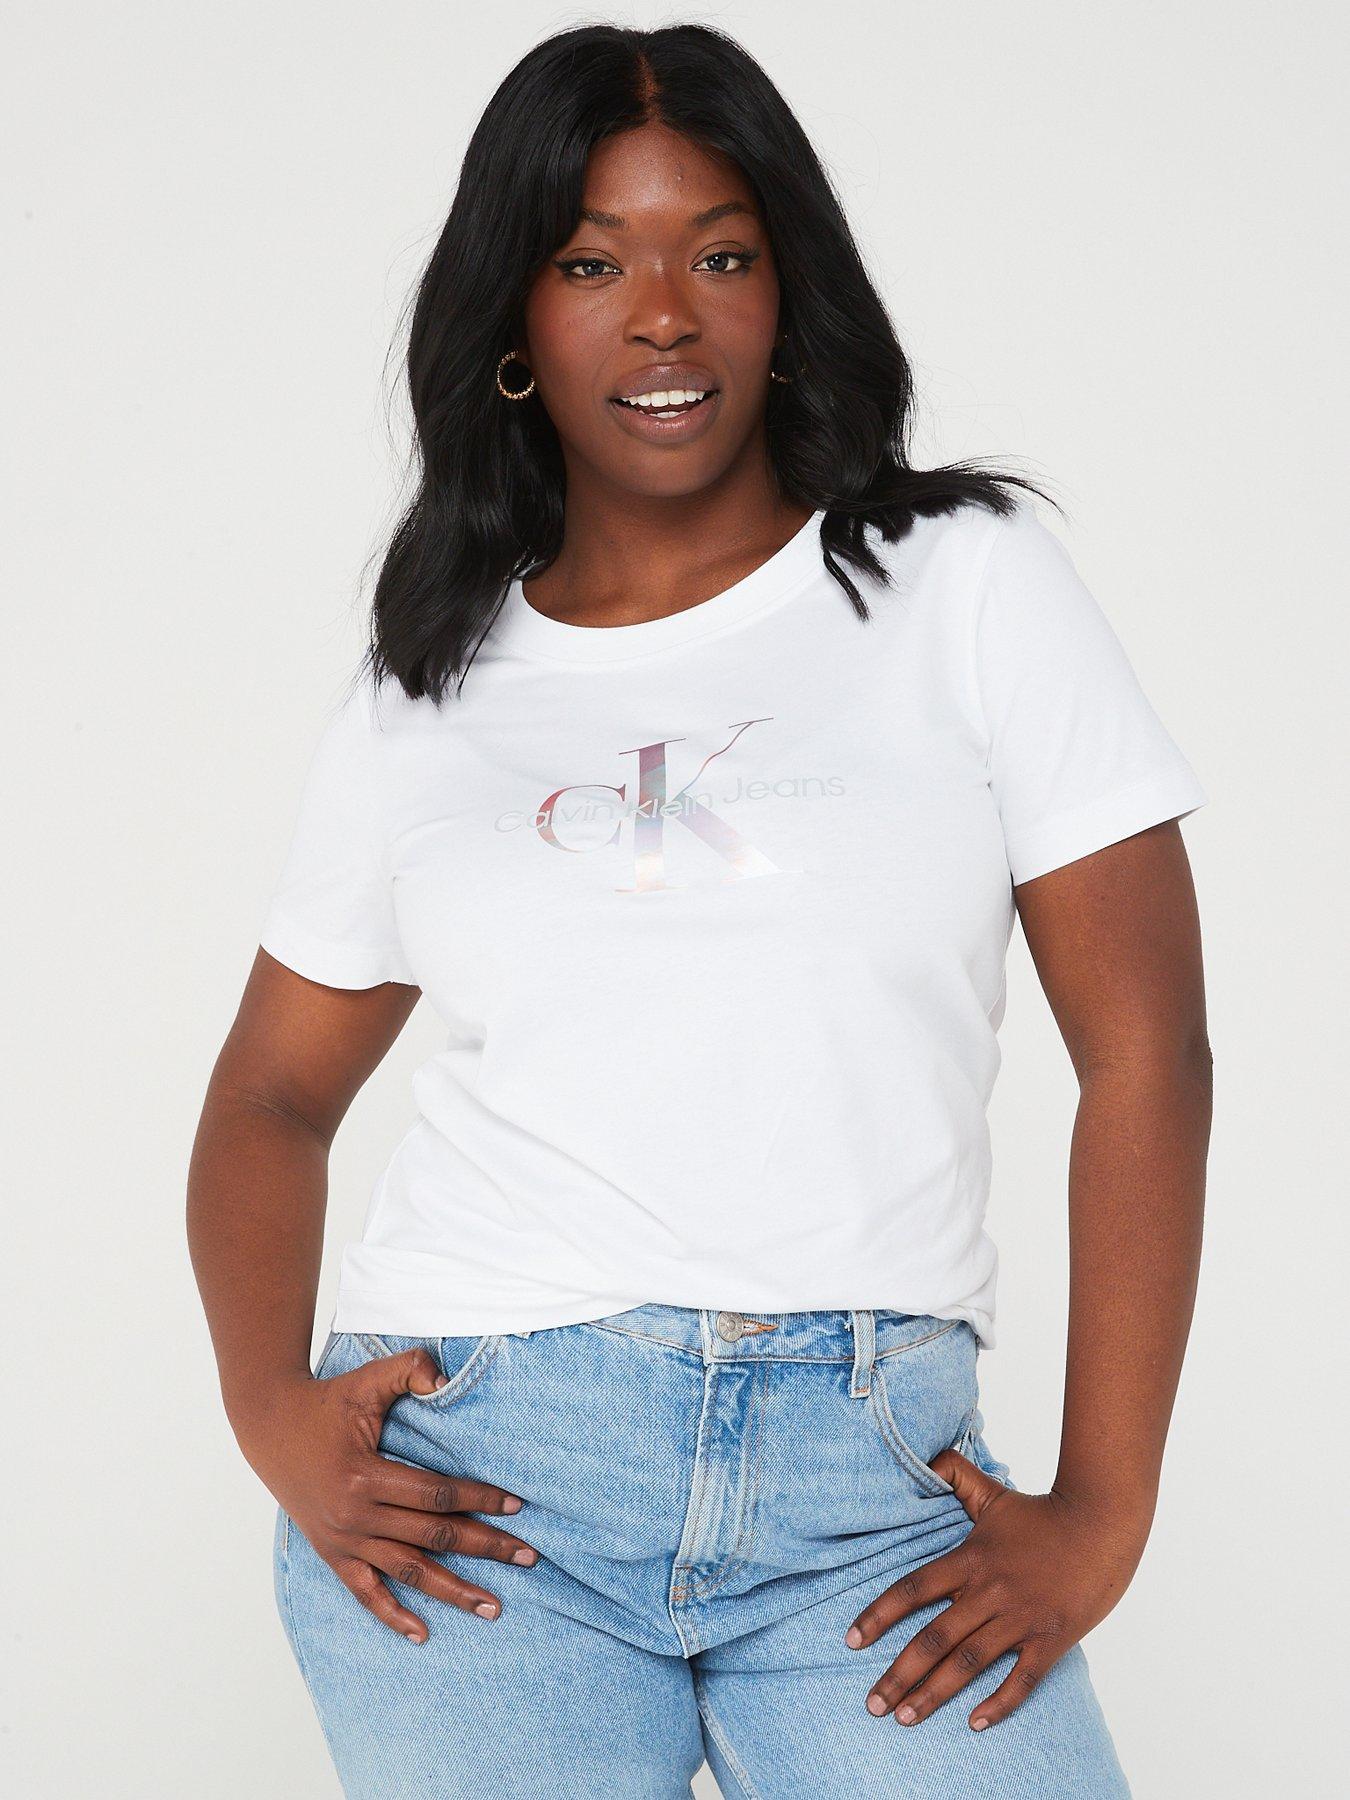 Plus Size | Calvin klein jeans | Tops & t-shirts | Women